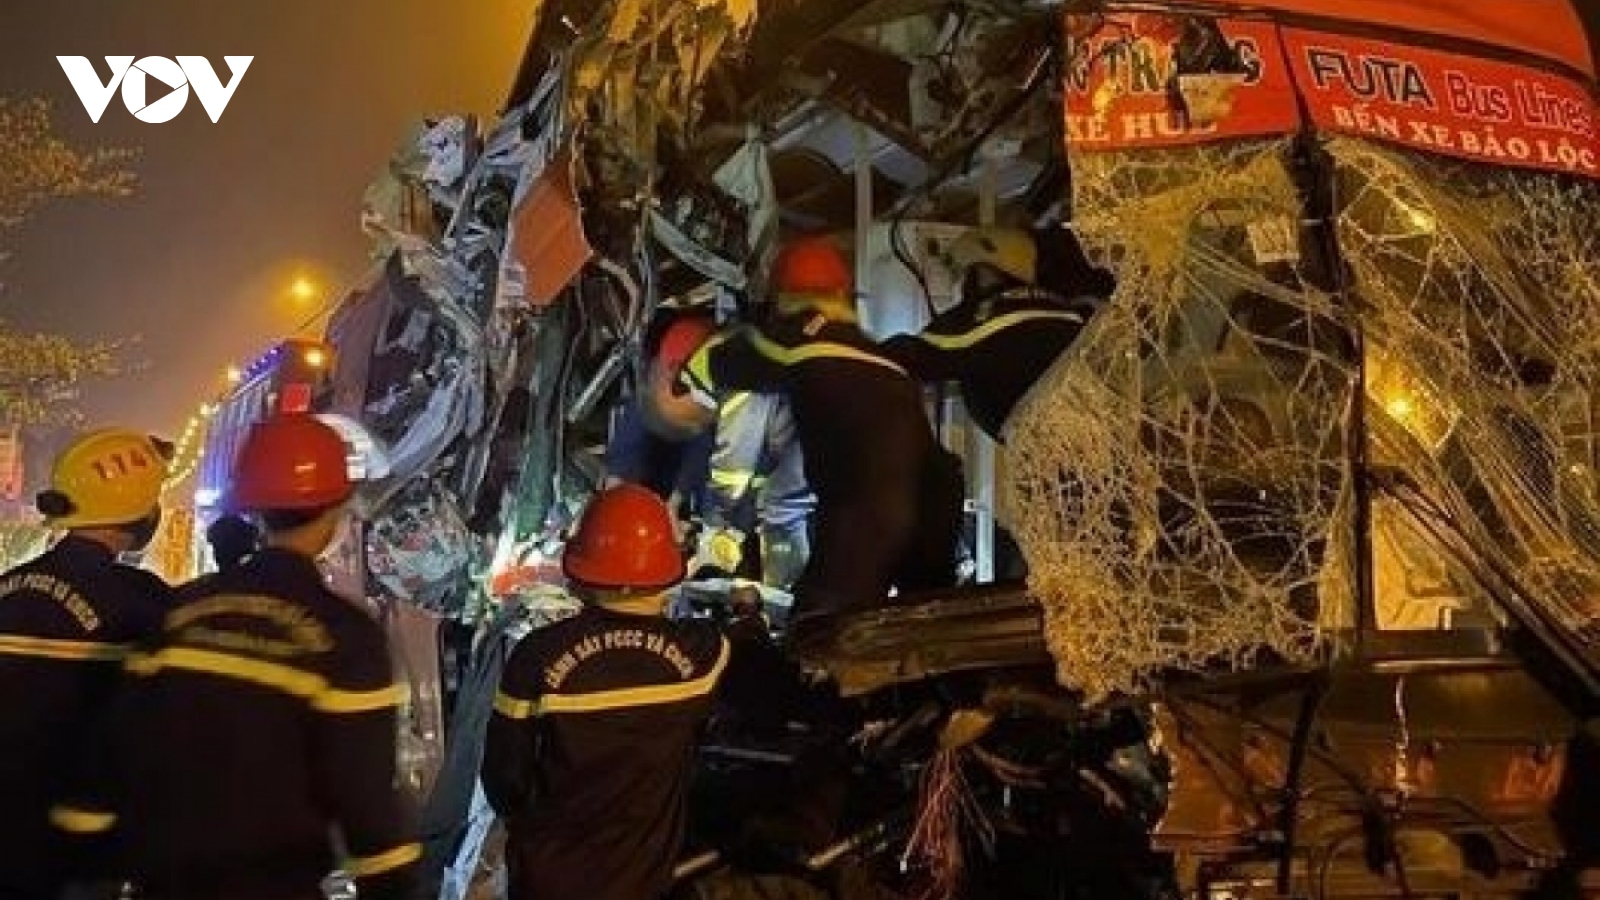 Three dead and over a dozen injured in Quang Nam van crash